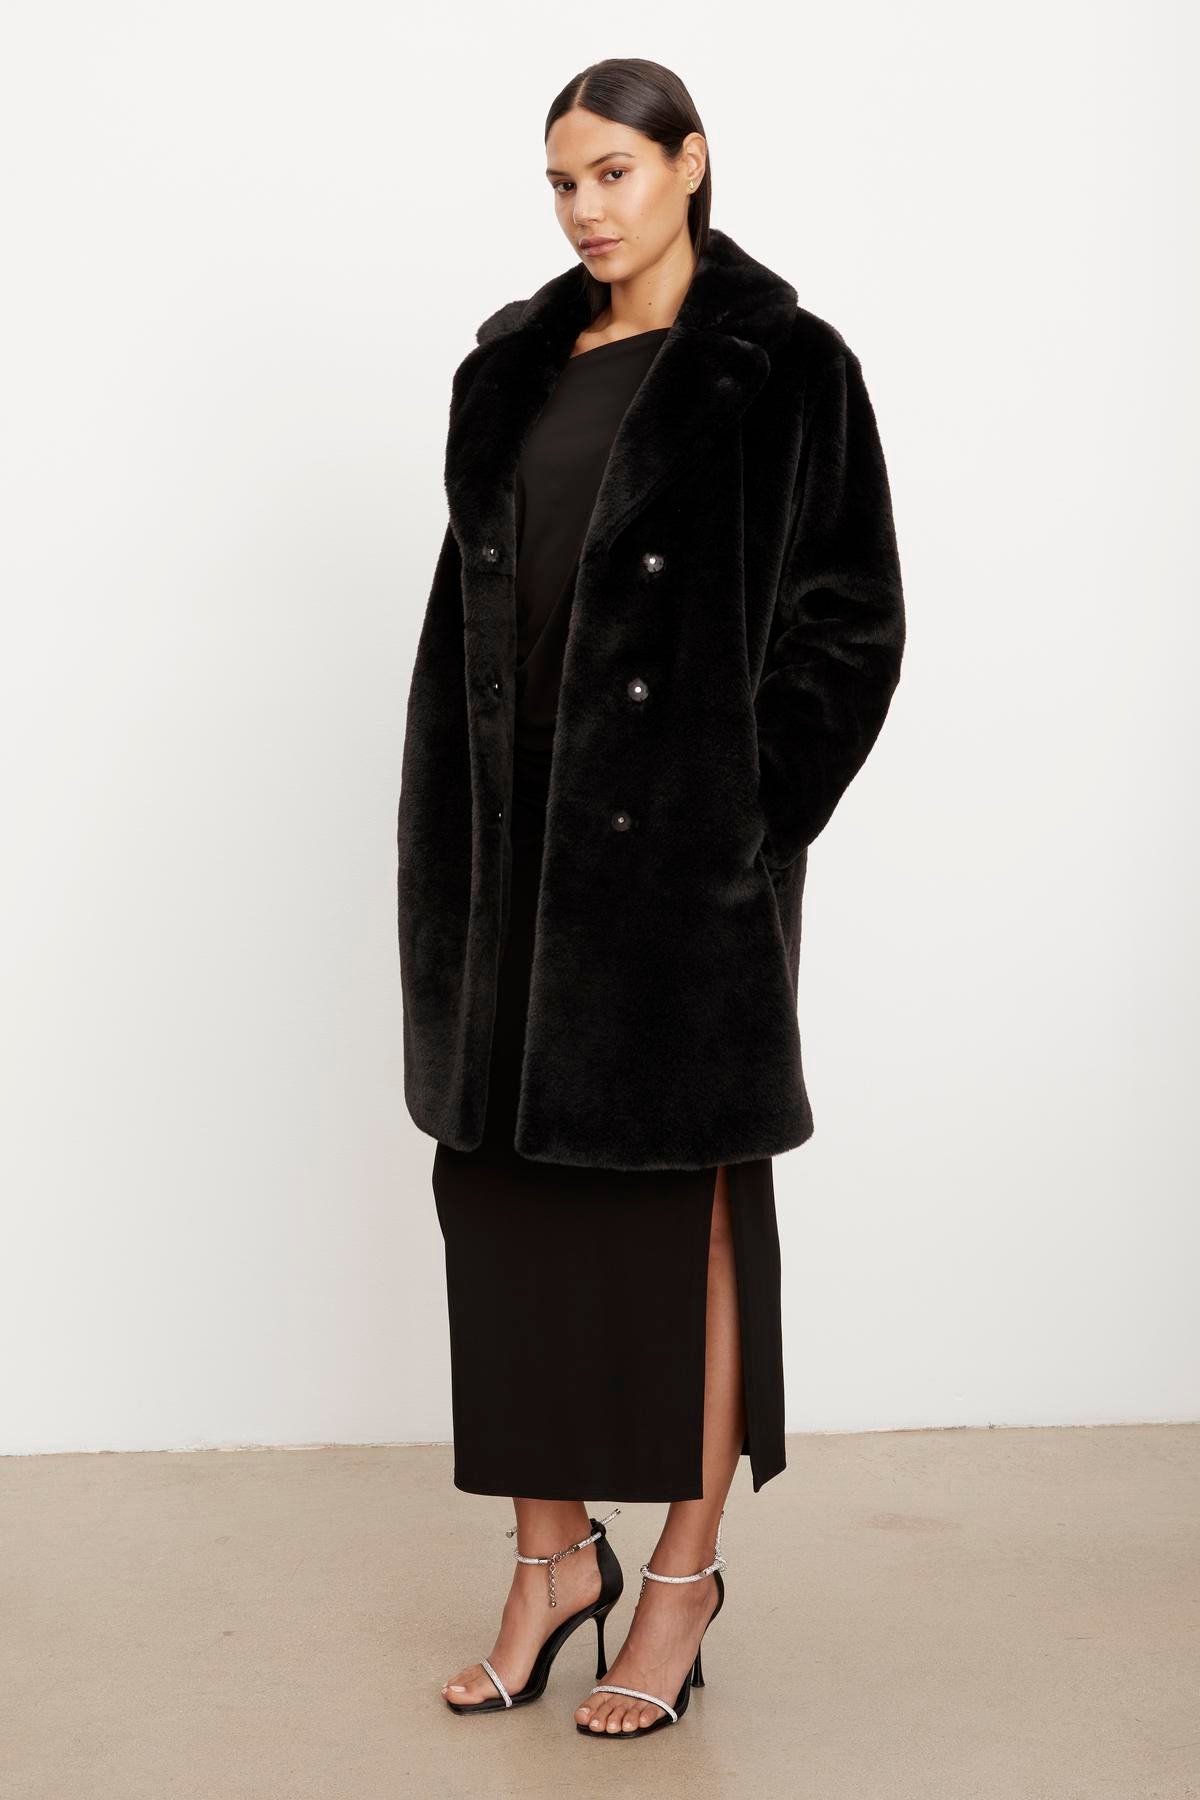 The model is wearing a Velvet by Graham & Spencer EVALYN LUX FAUX FUR COAT.-35624035287233